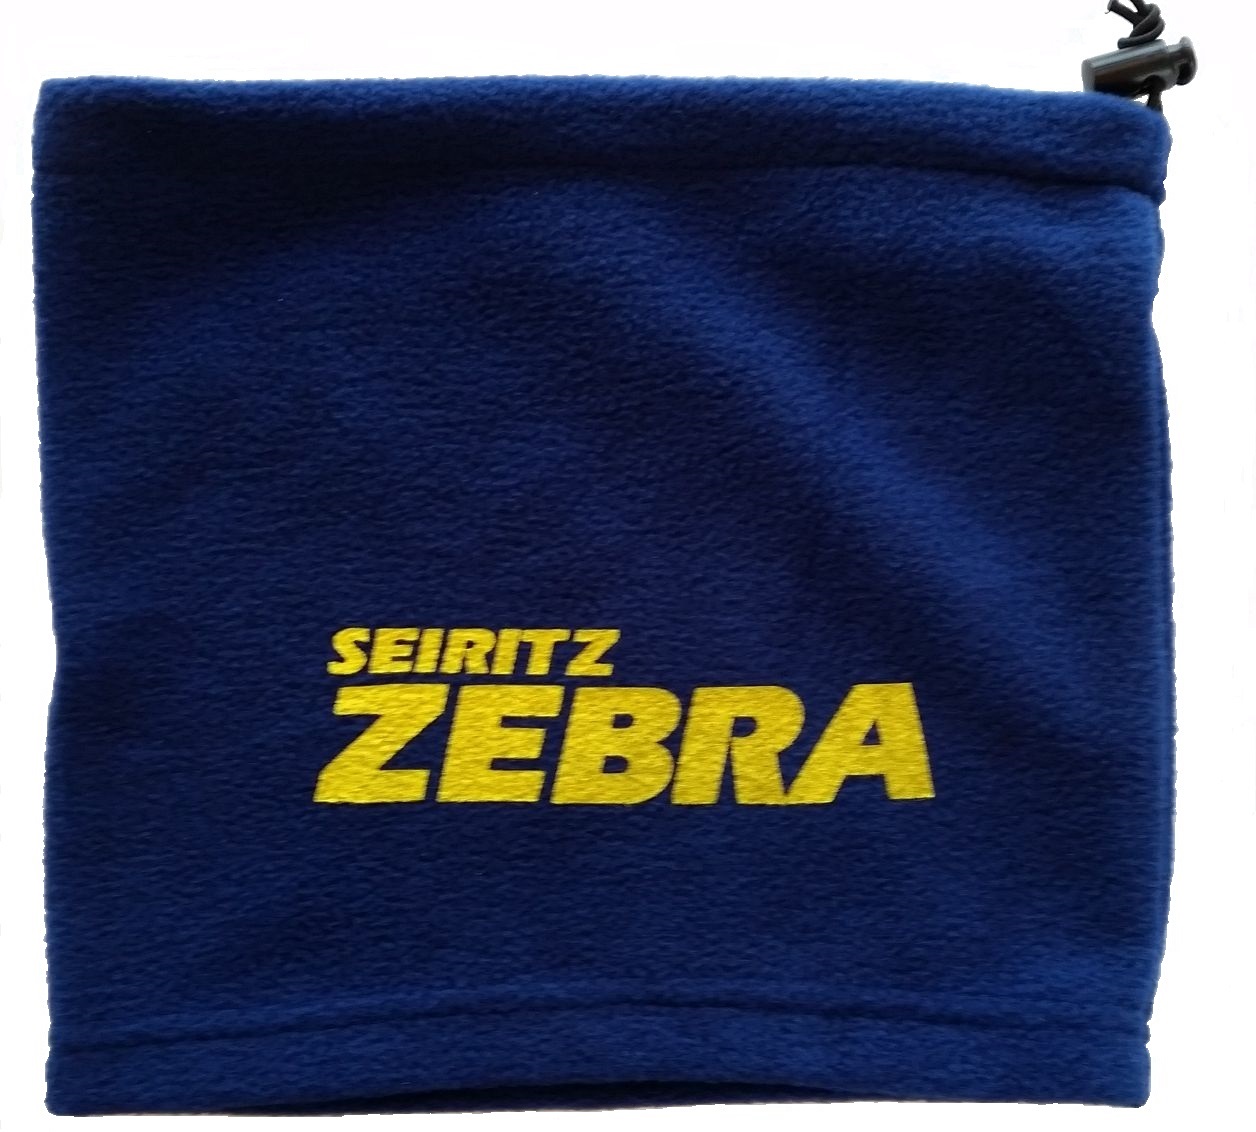 http://www.seiritz-zebra.jp/topics/images/n_5_2_4.jpg